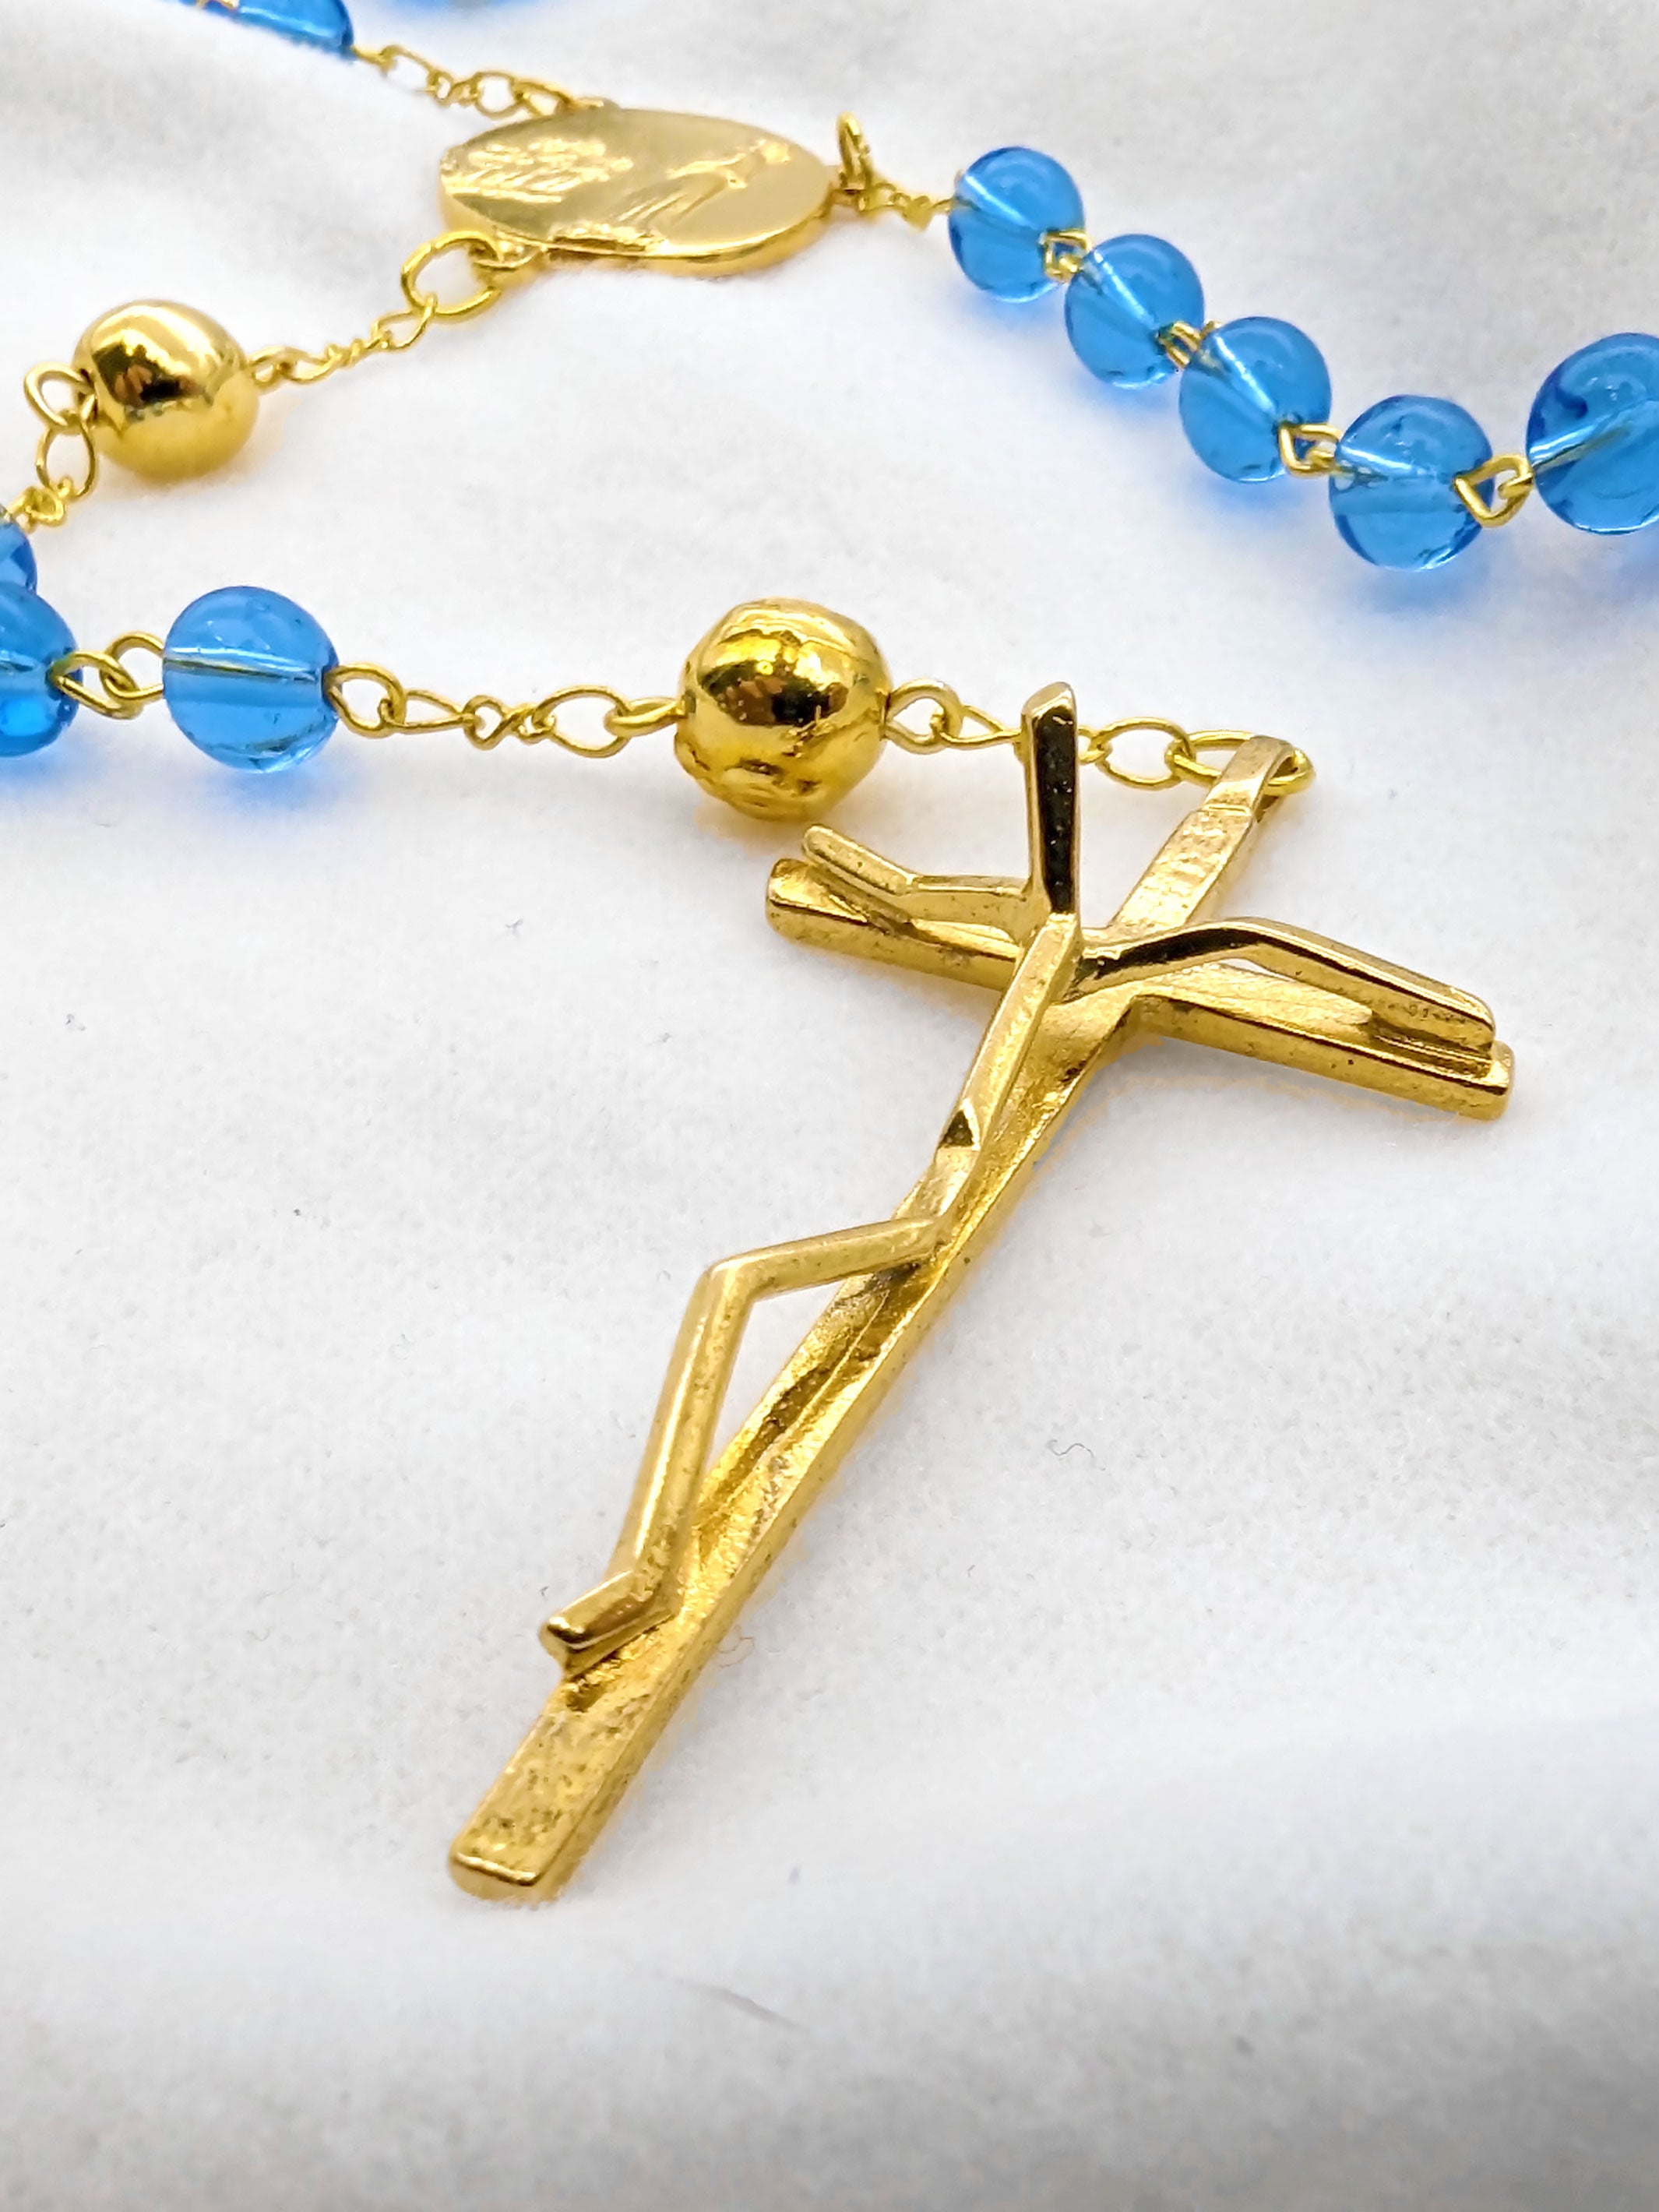 Handmade Shrine of Fatima Official Rosary with Blue Glass Beads